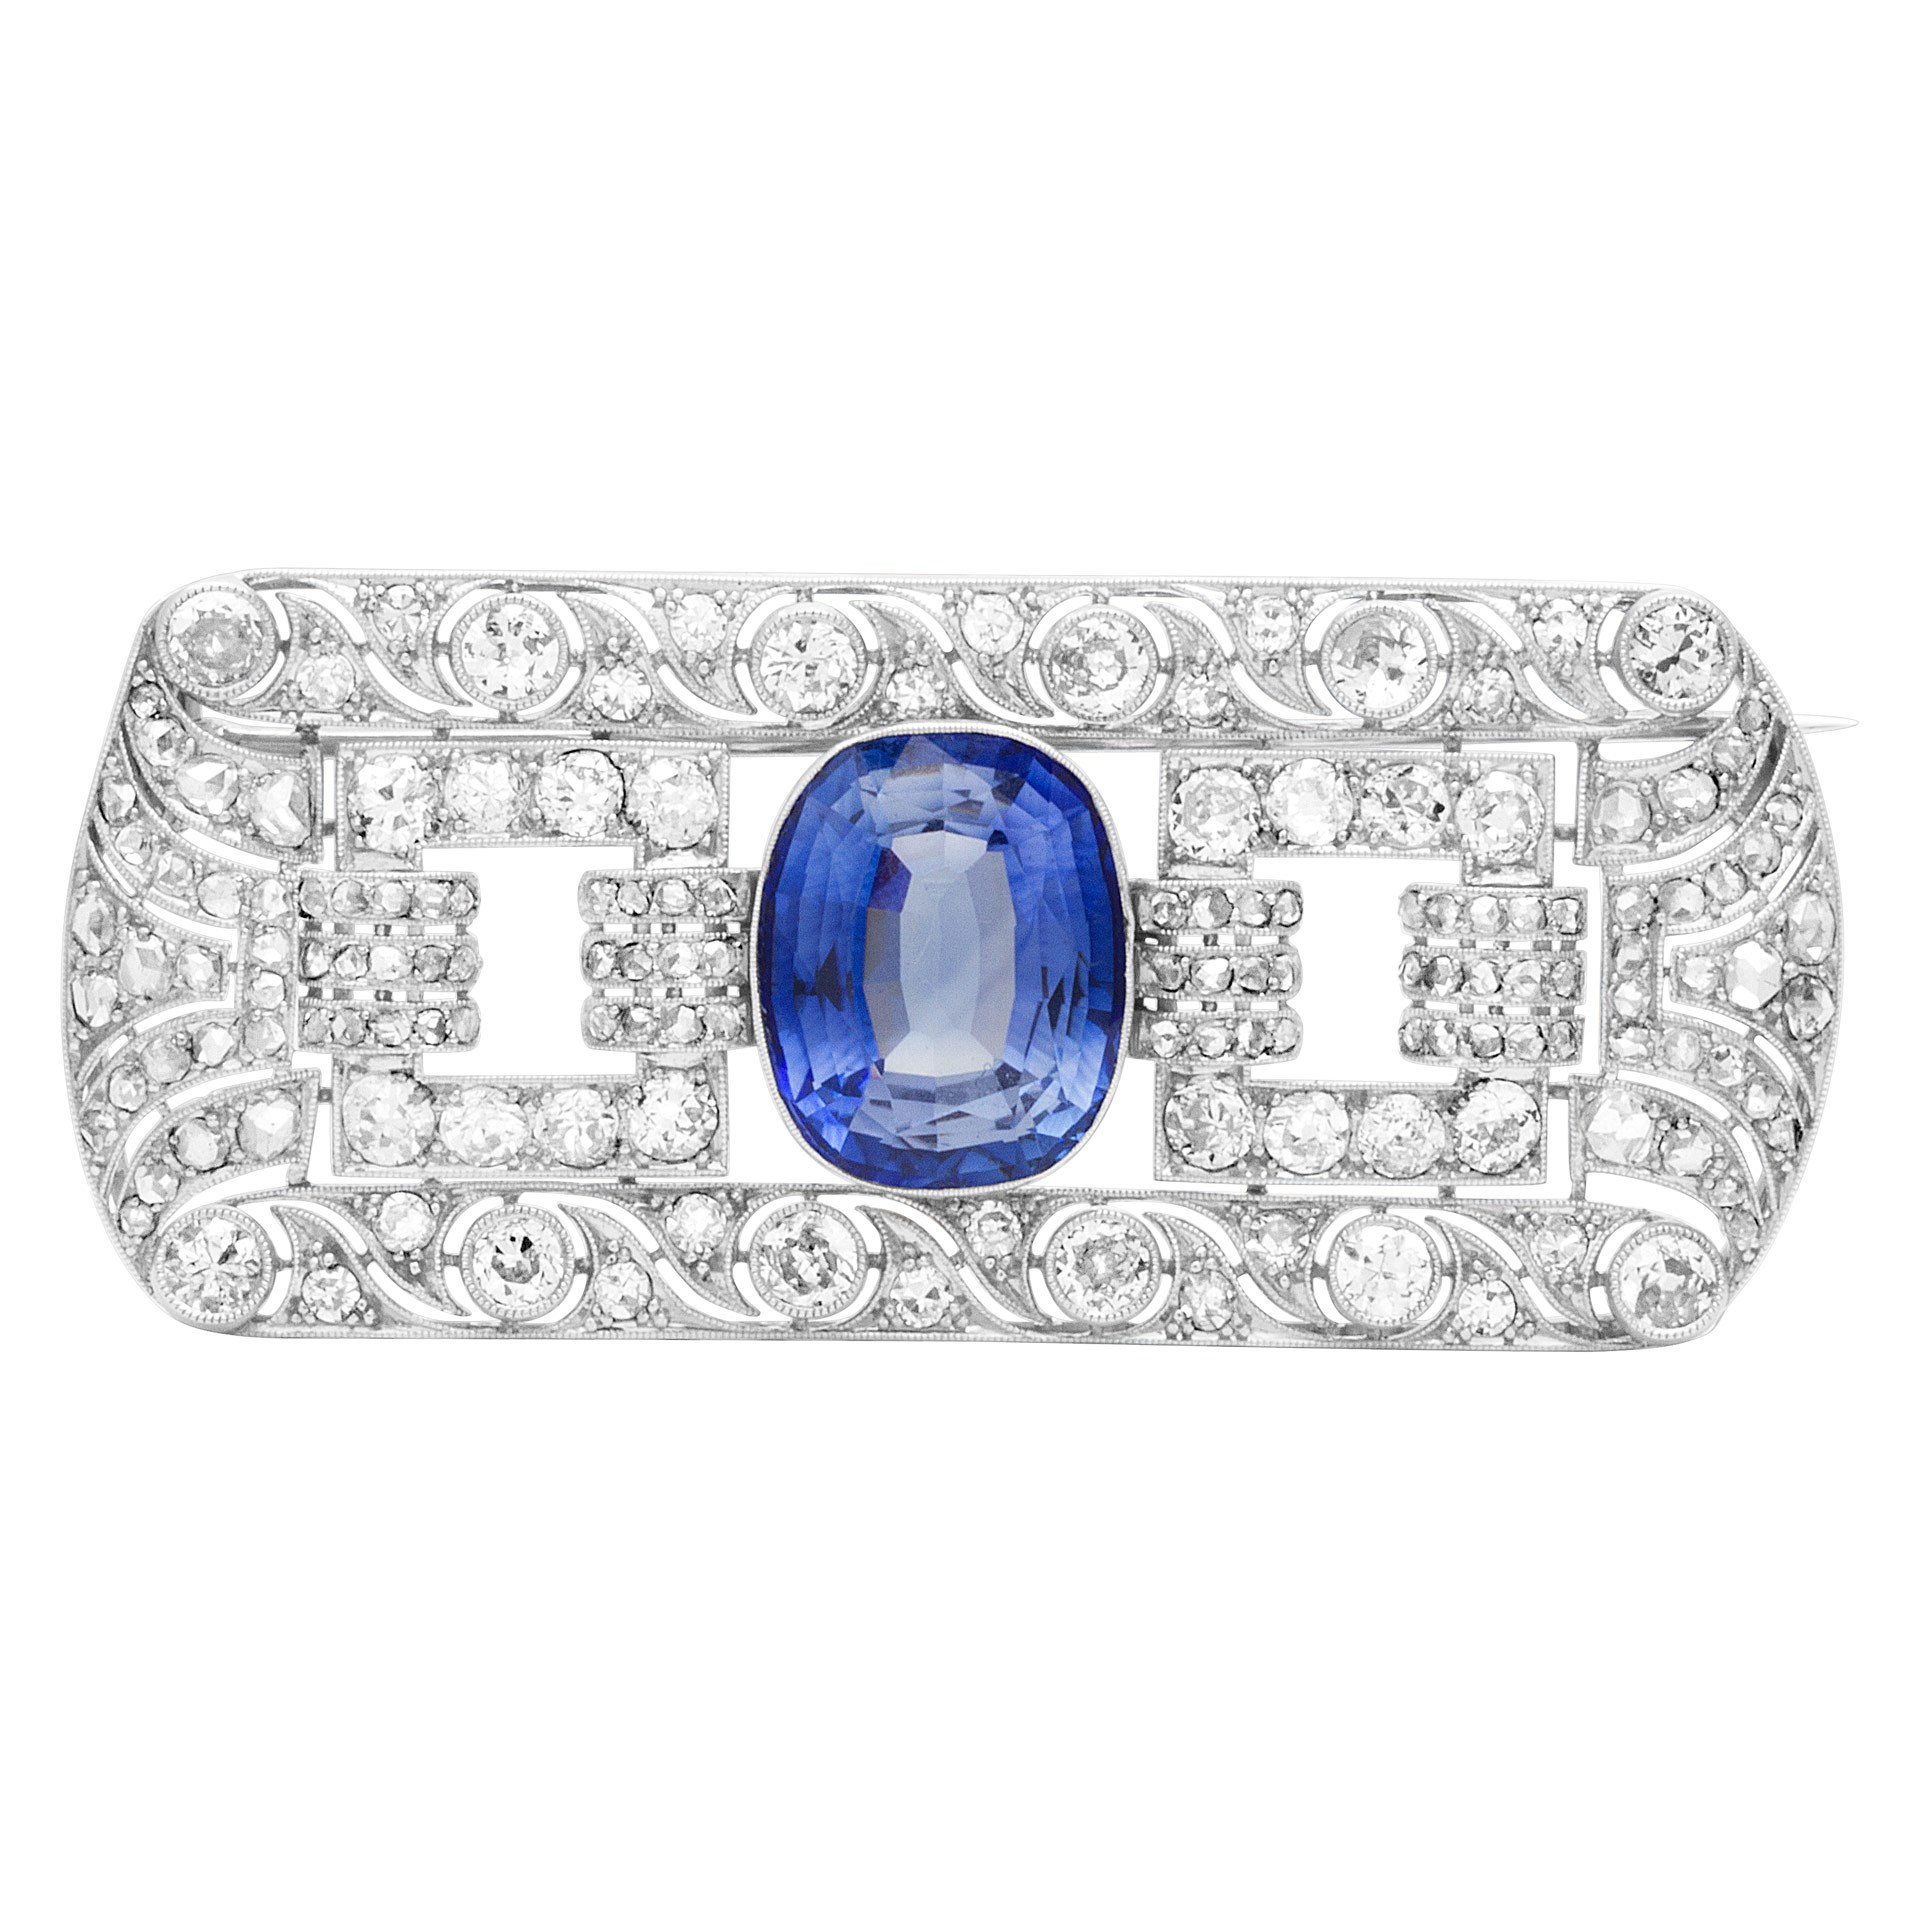 Art Deco diamond & blue sapphire platinum pin/broach 4.50cts in diamonds